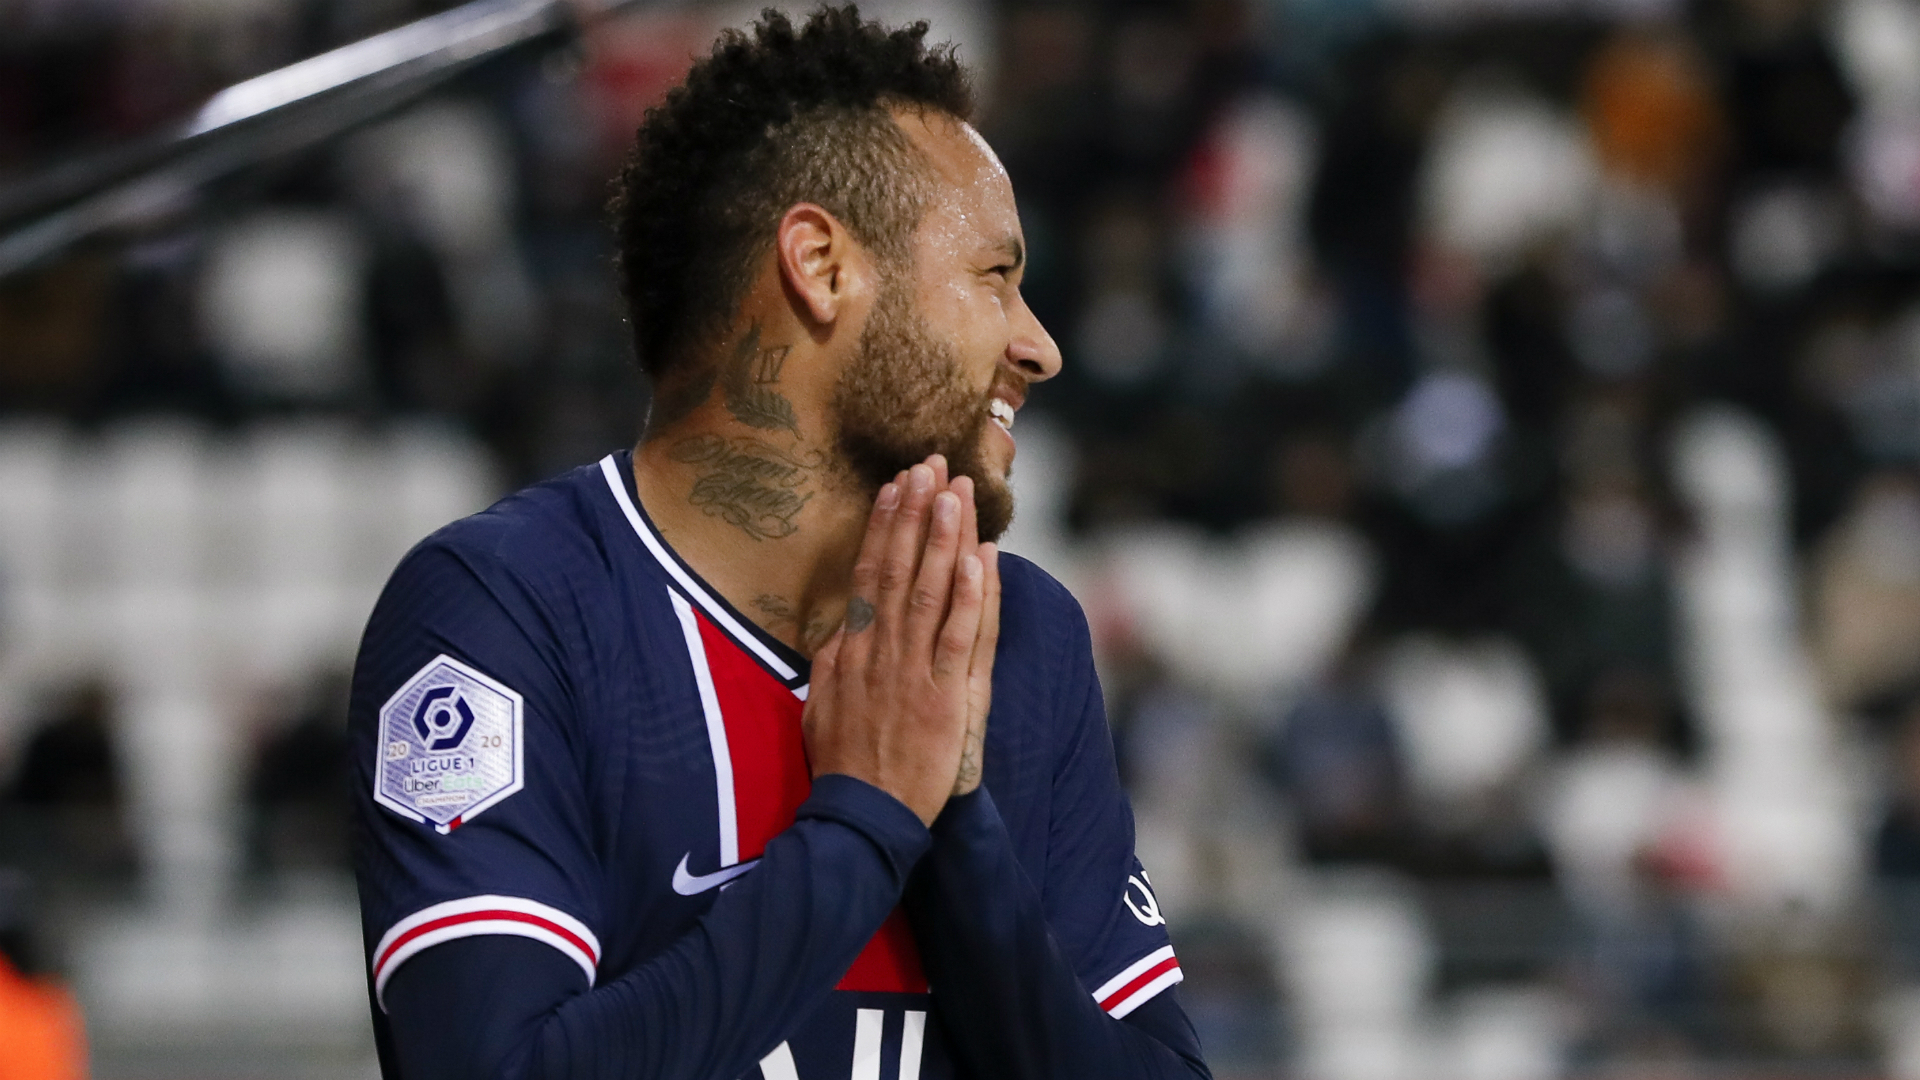 Ligue 1 champions Paris Saint-Germain provided a fitness update on Neymar and Juan Bernat.